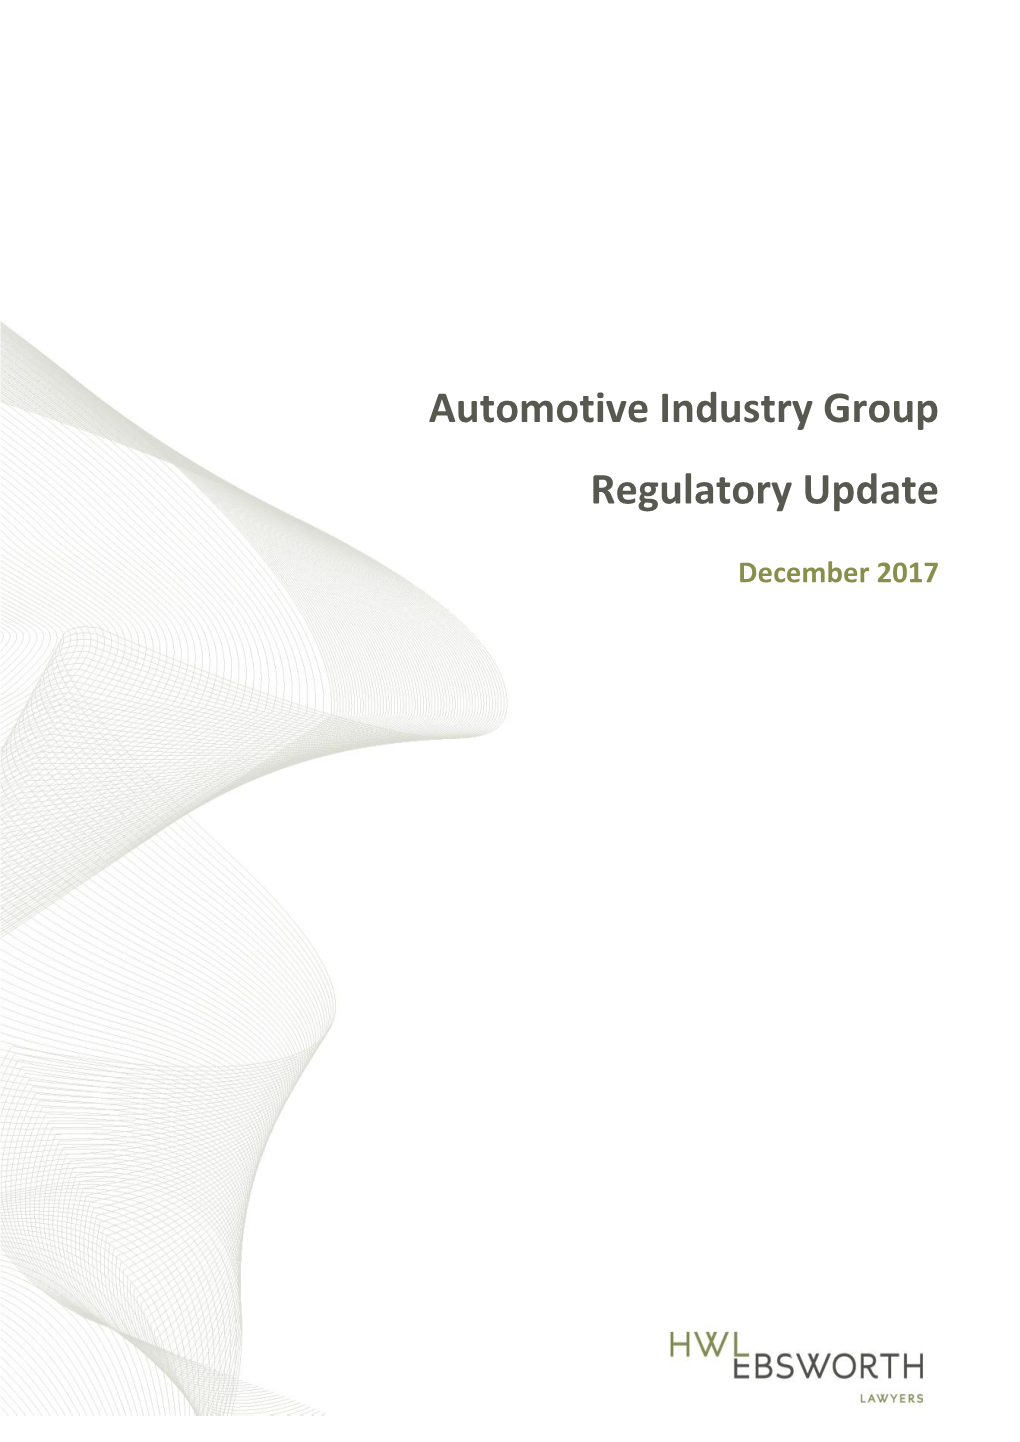 Automotive Industry Group Regulatory Update